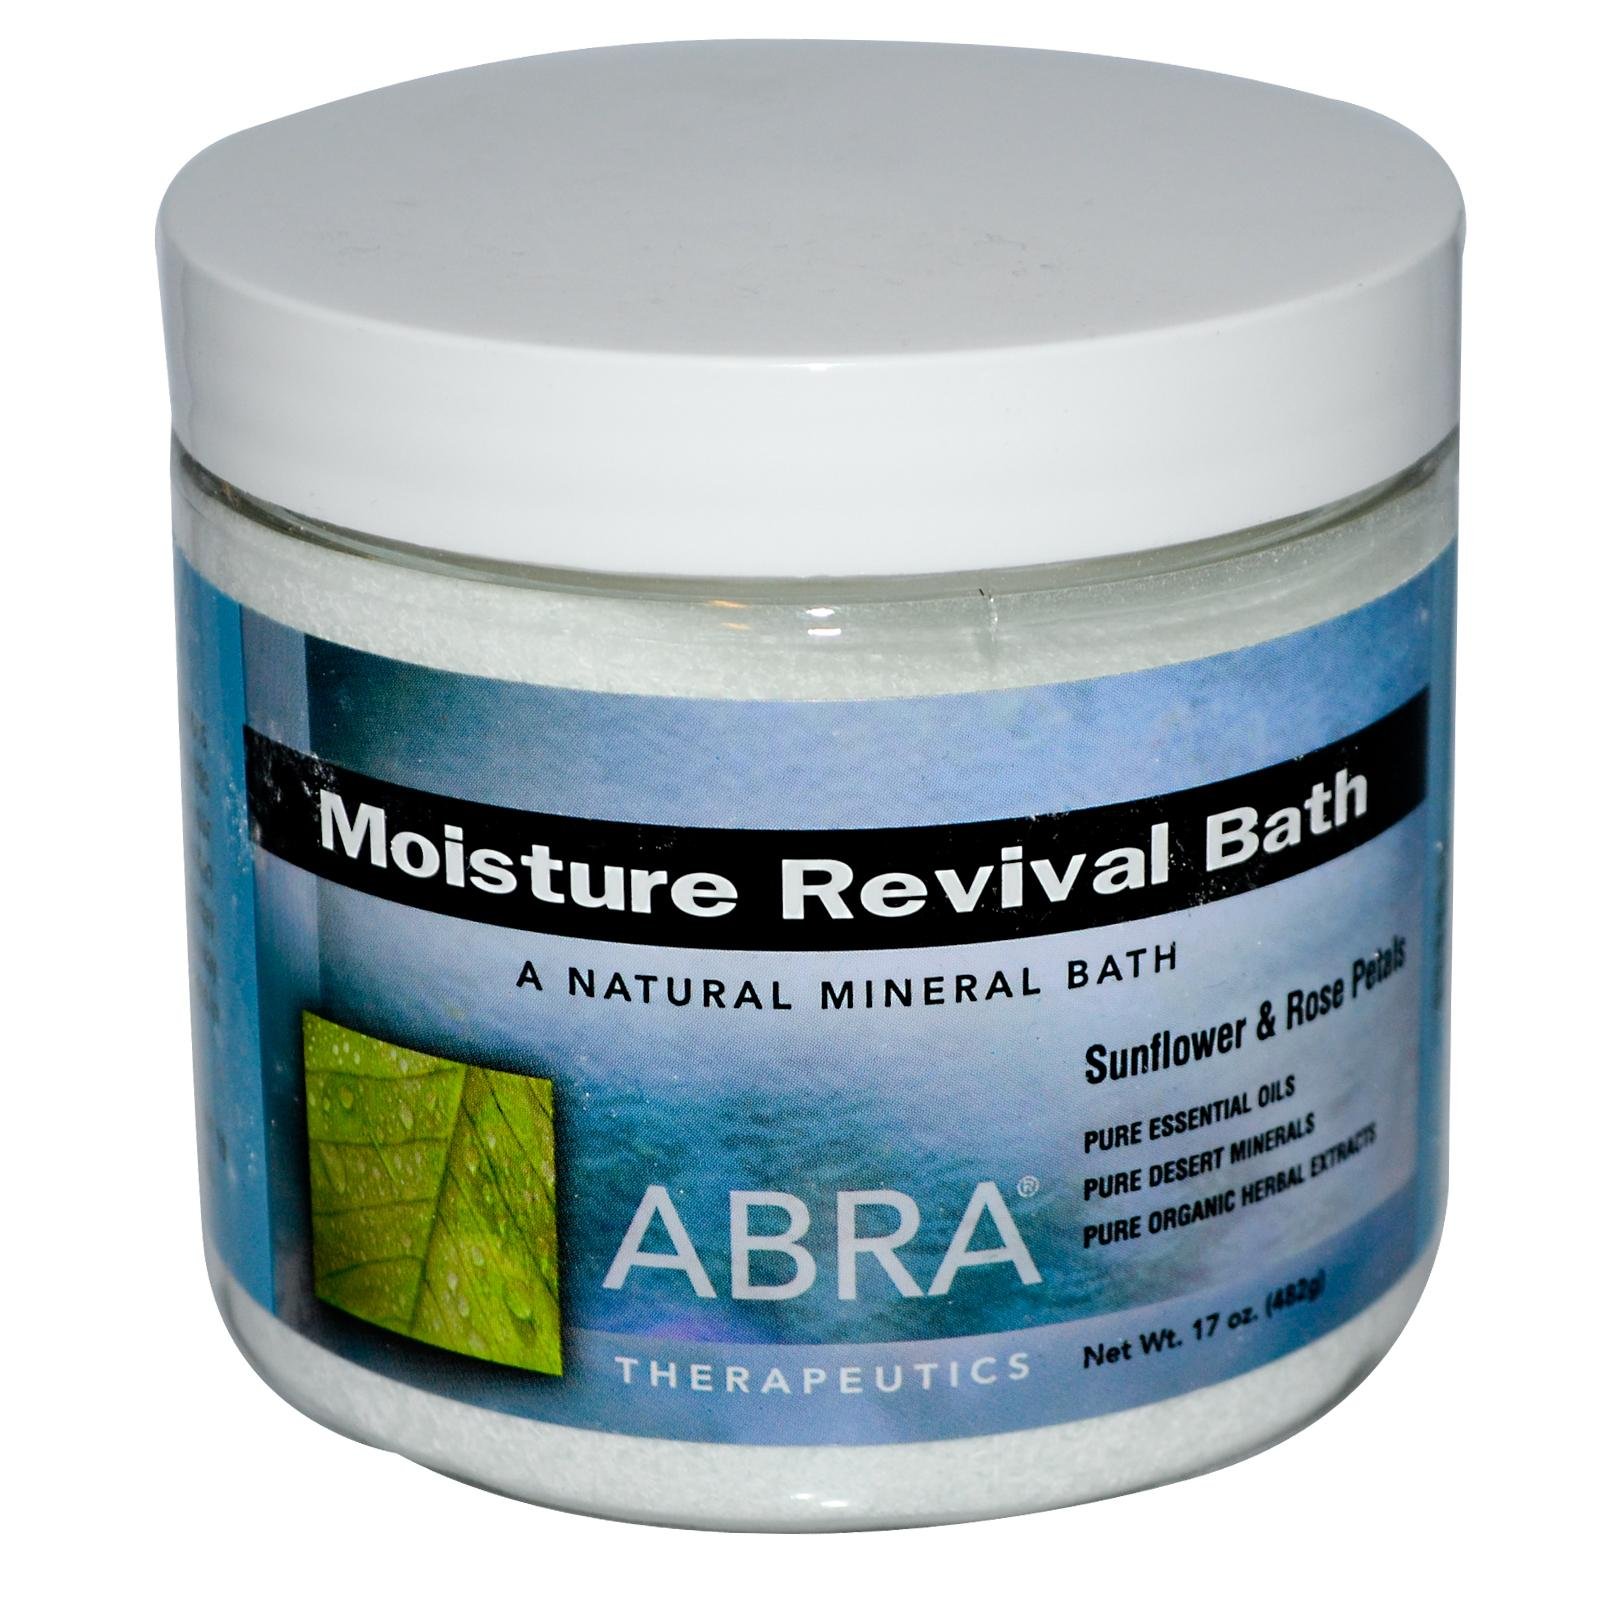 Moisture Revival Bath-Sunflowers & Rose Petals Abra Therapeutics 17 oz Powder